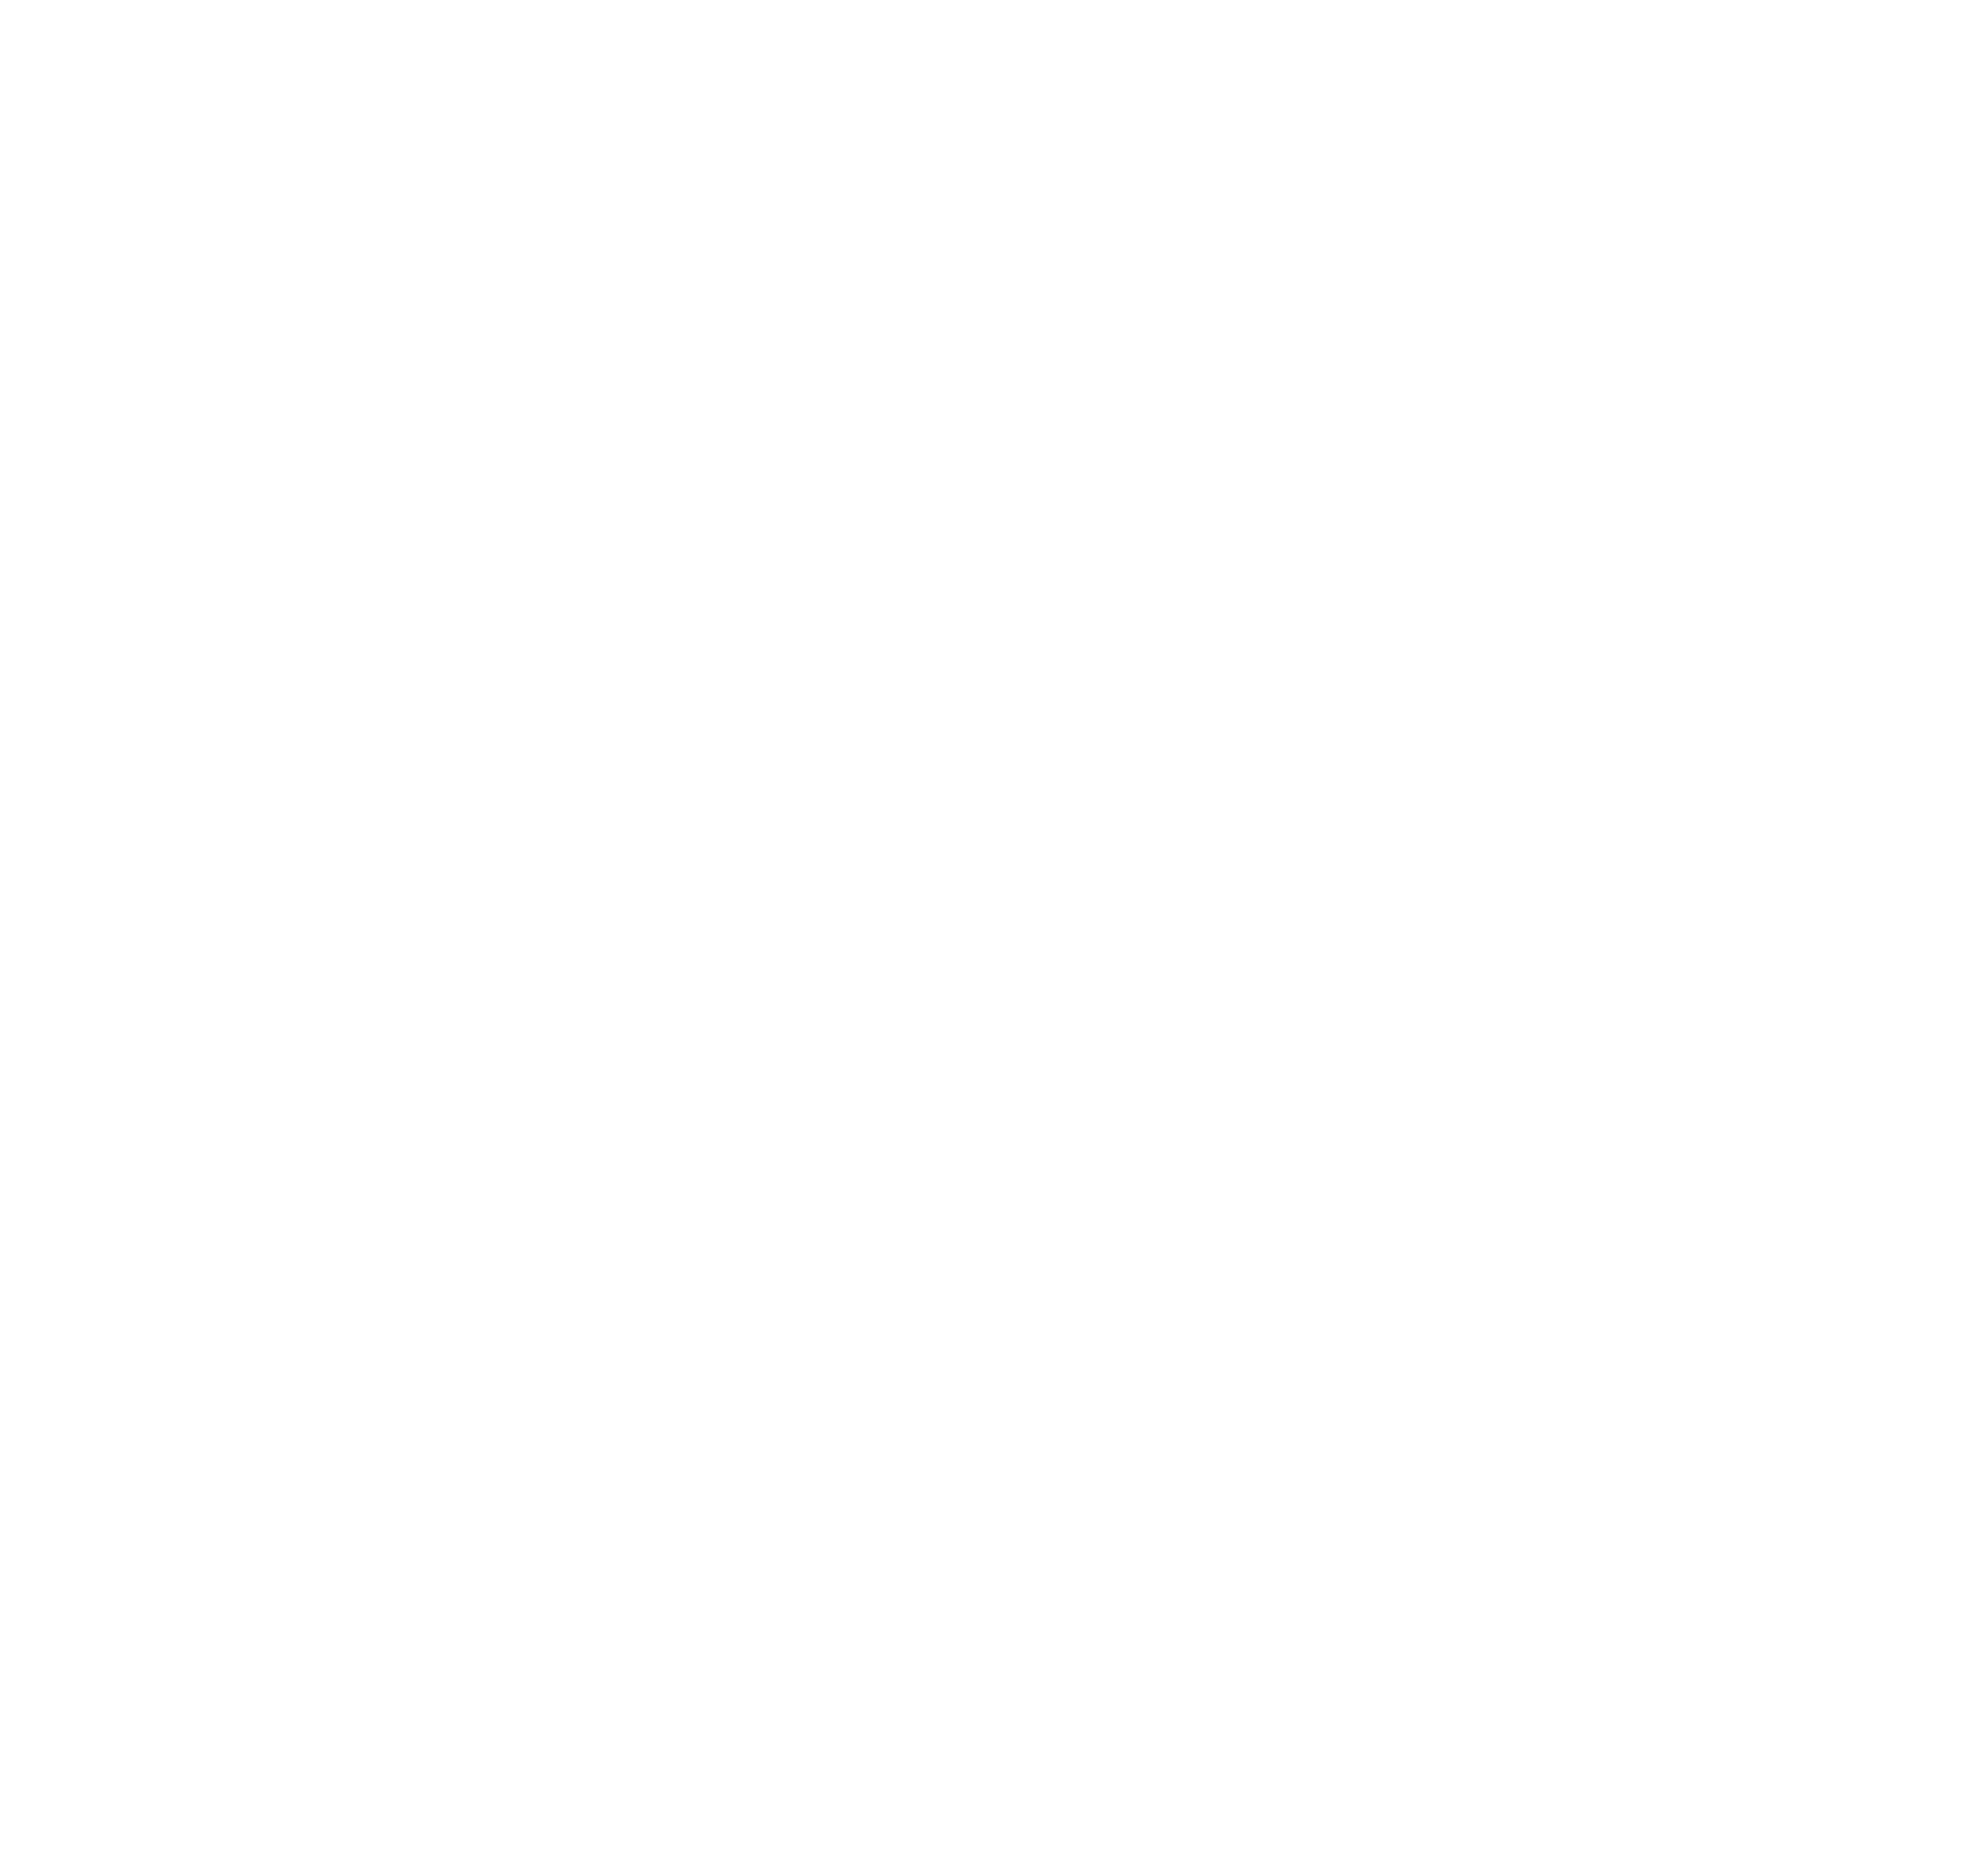 East Mesa Handyman Service Logo